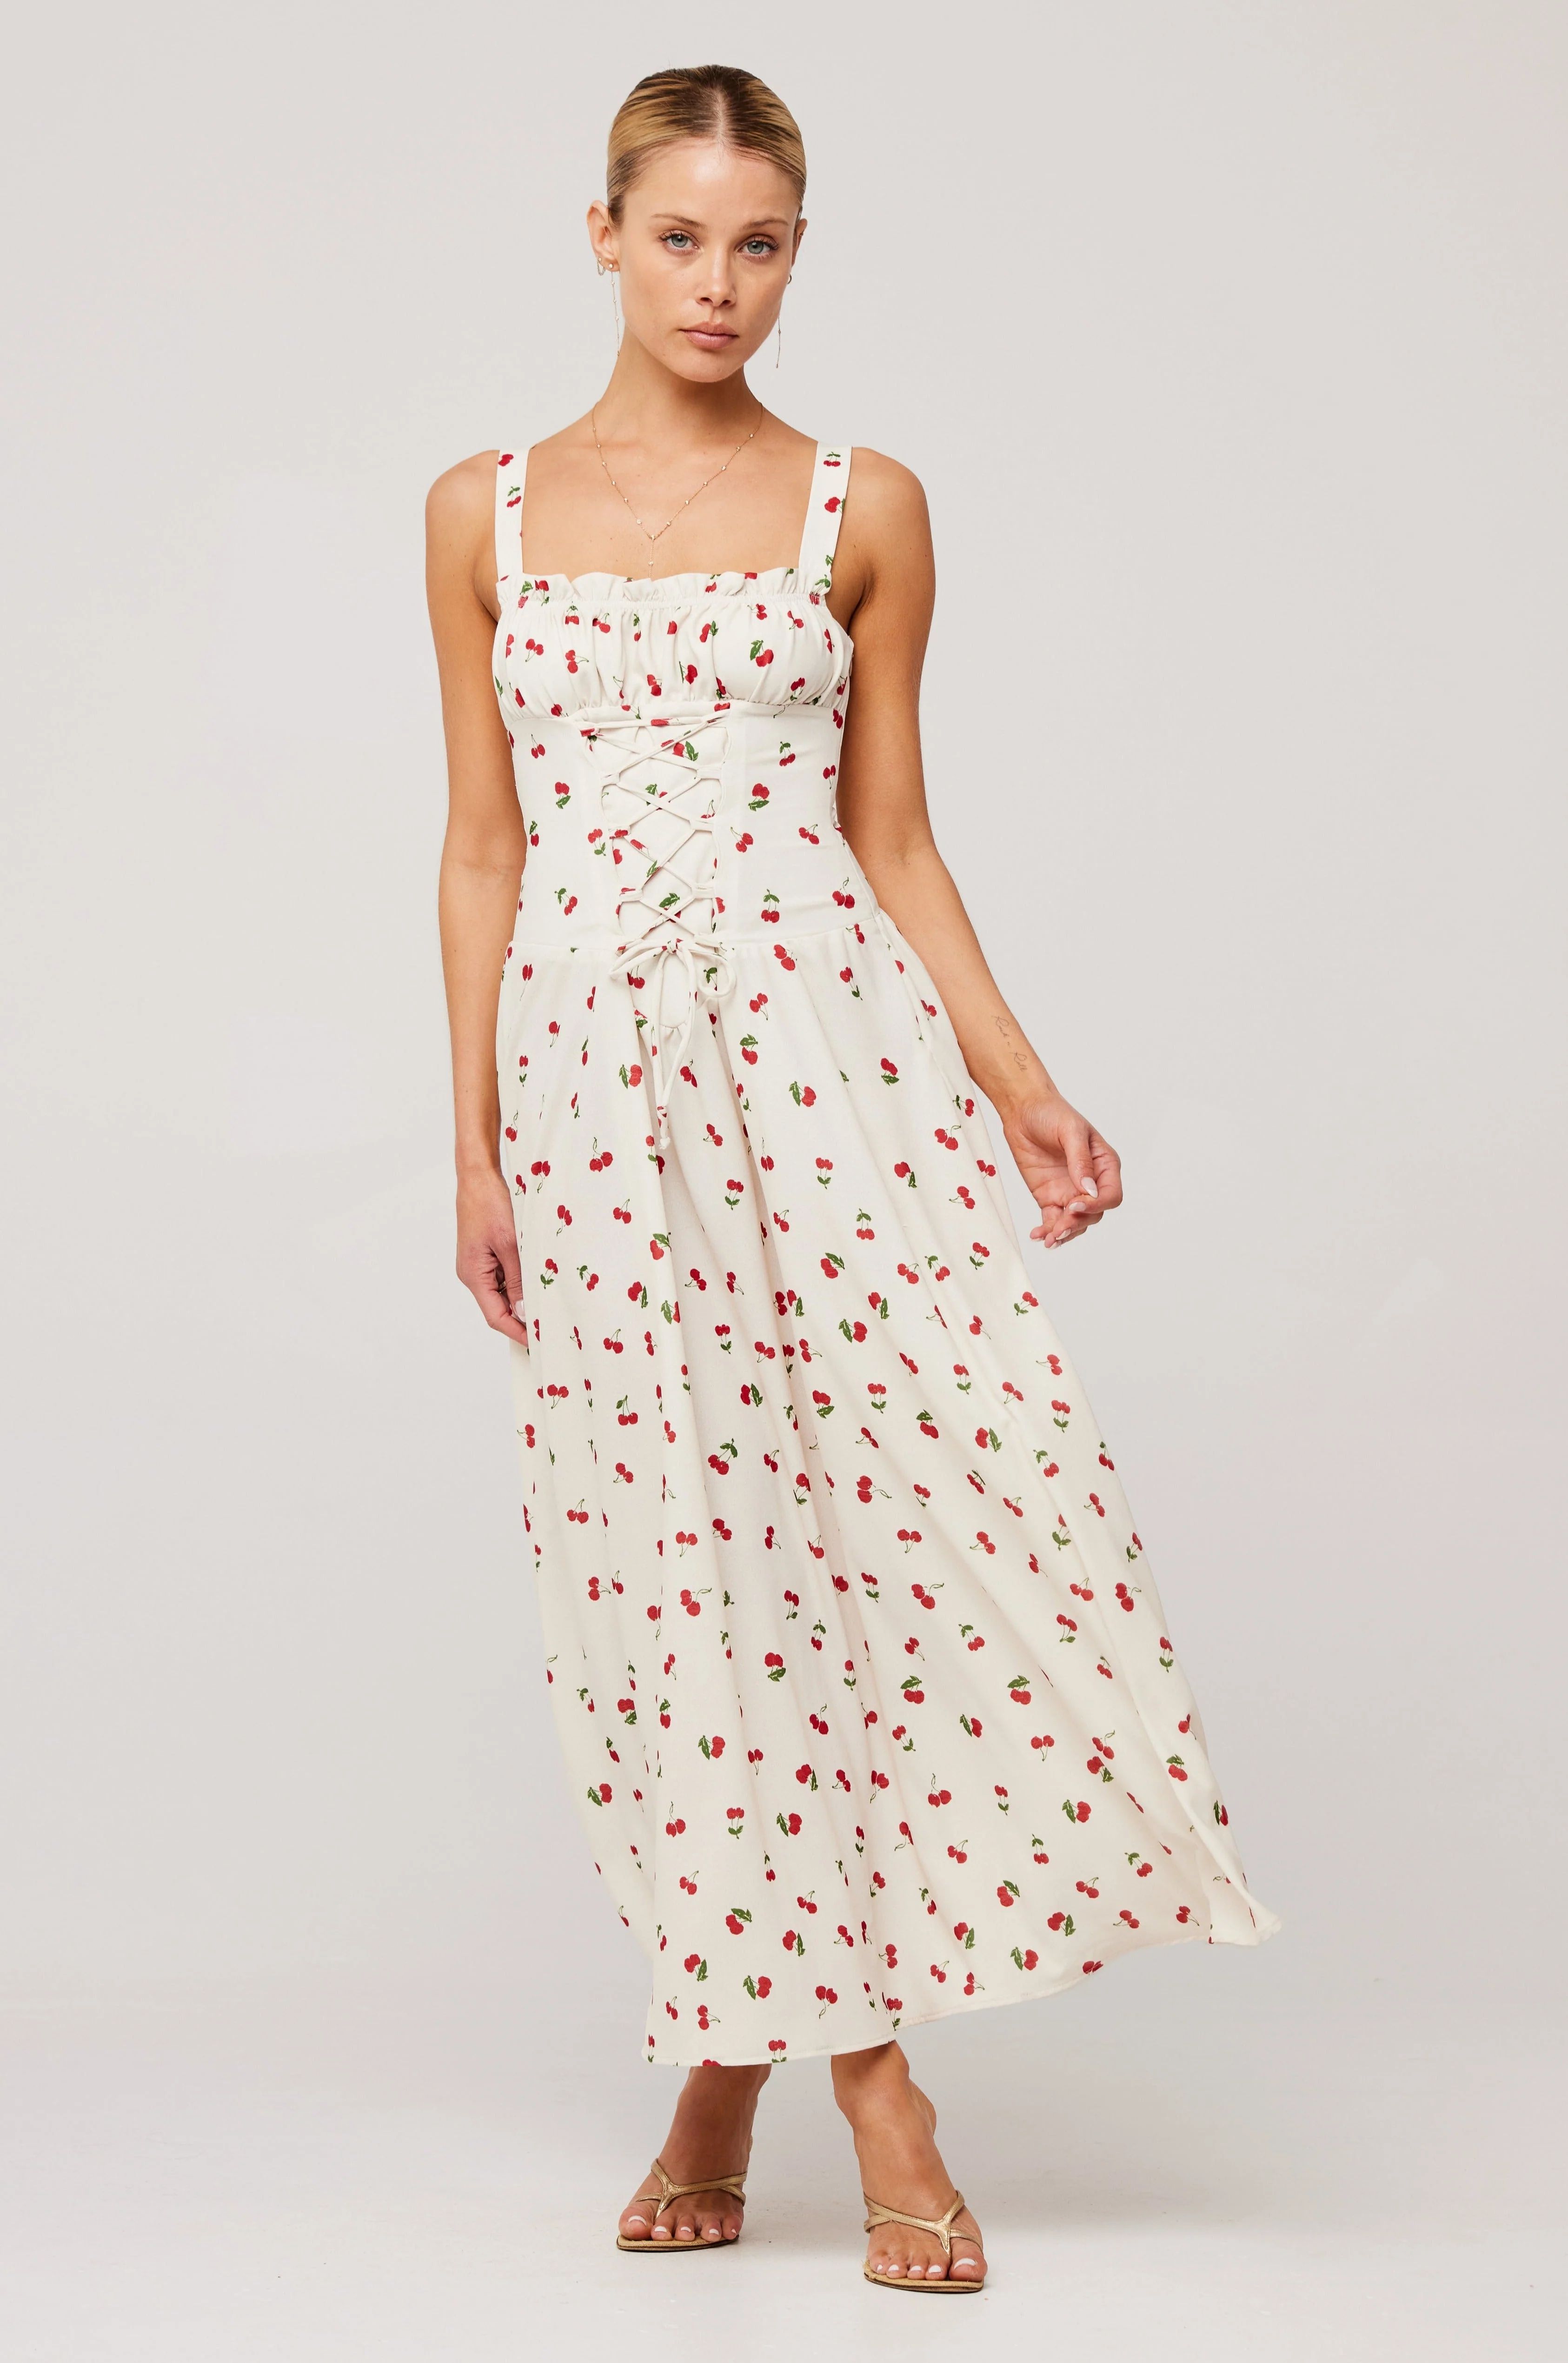 Izzy Dress in Cherry | RESA